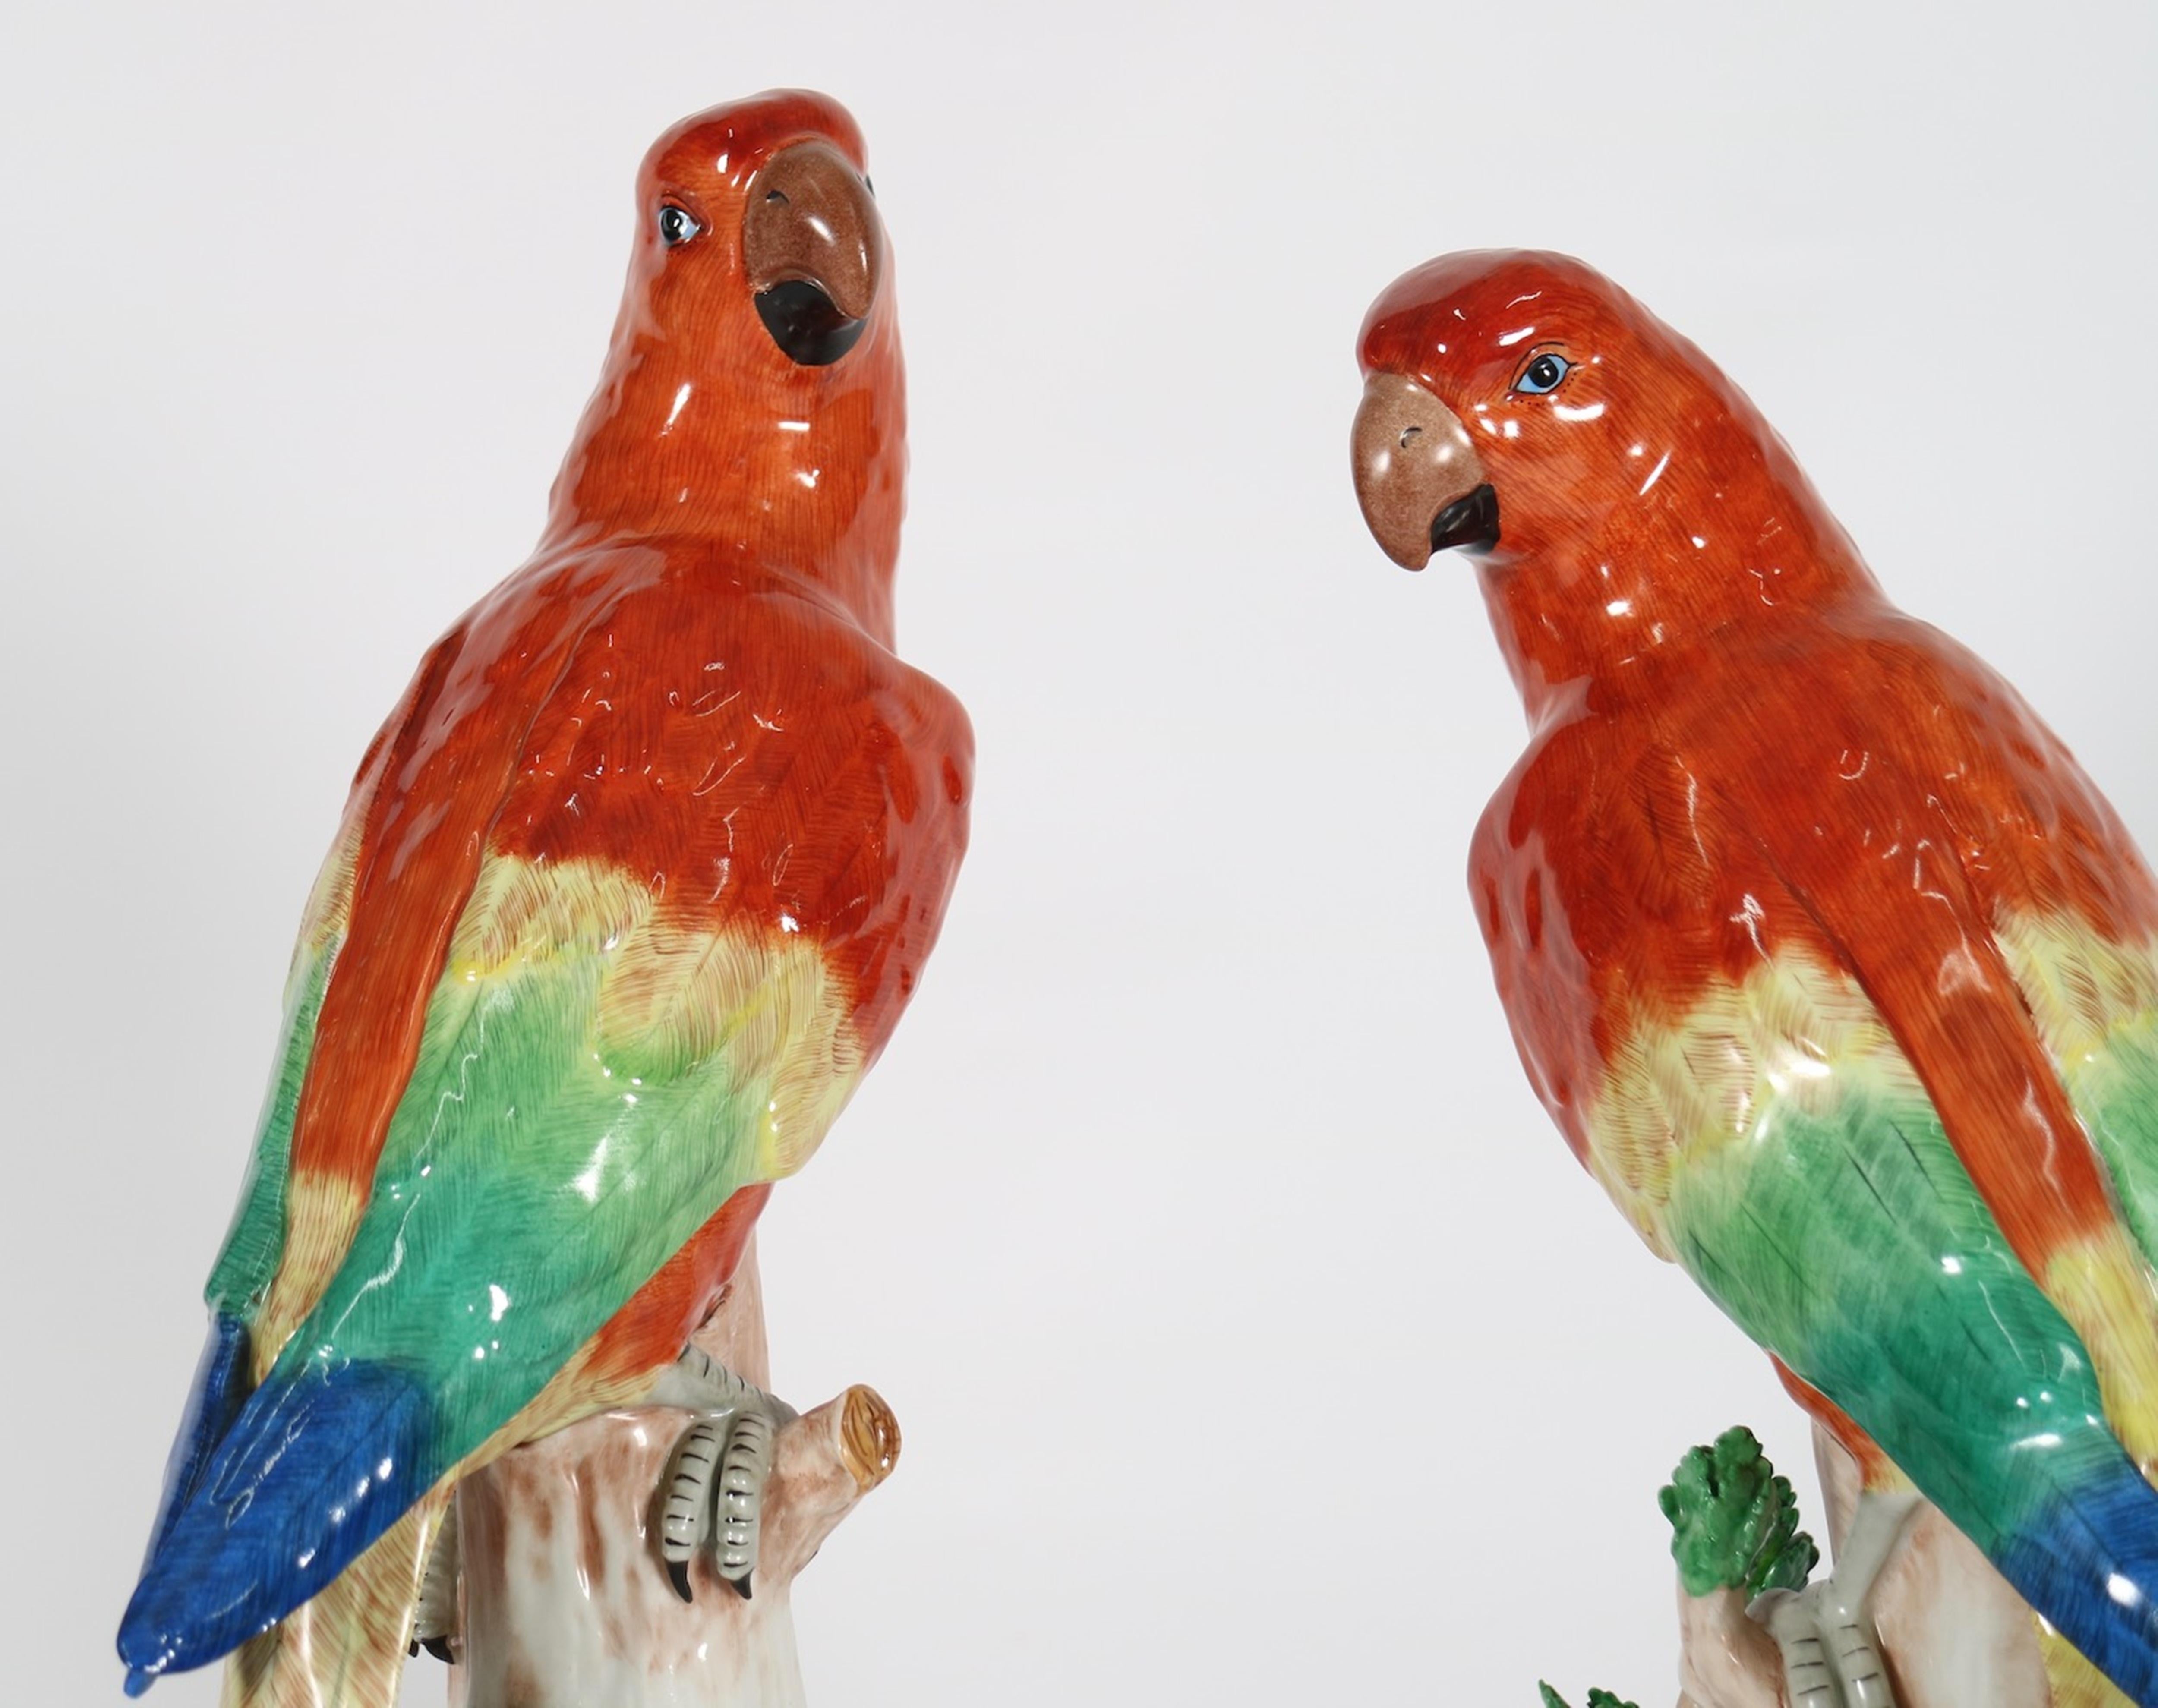 German Dresden Porcelain Sculpture of Macaw Parrots